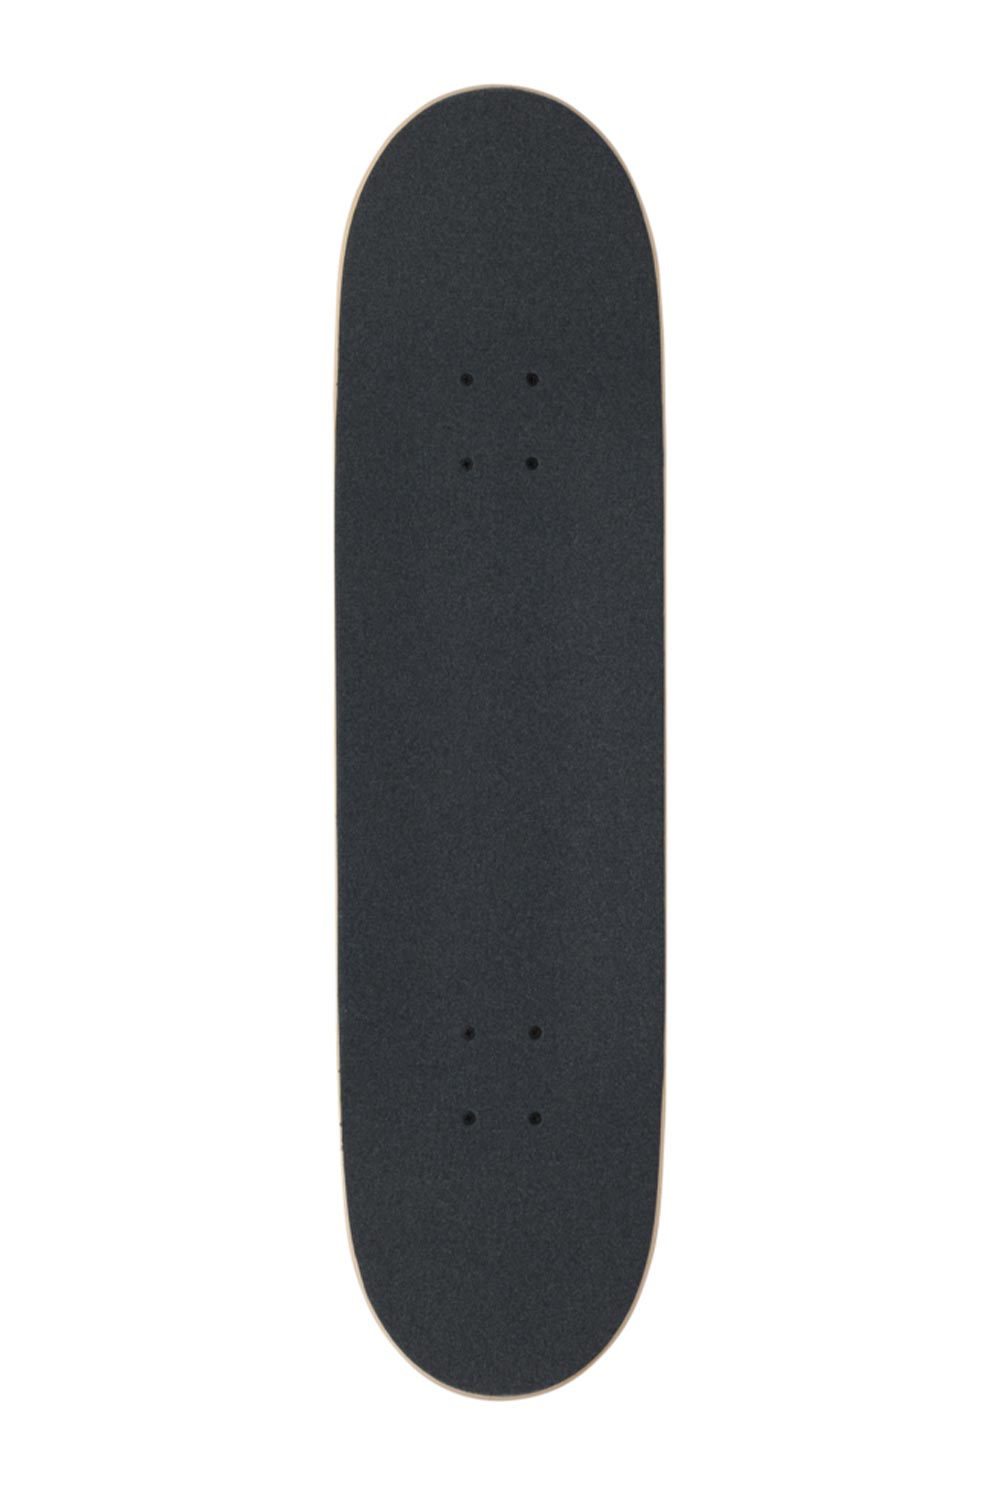 Santa Cruz Skateboards | Iridescent Dot Full Skateboard Complete 8.0"